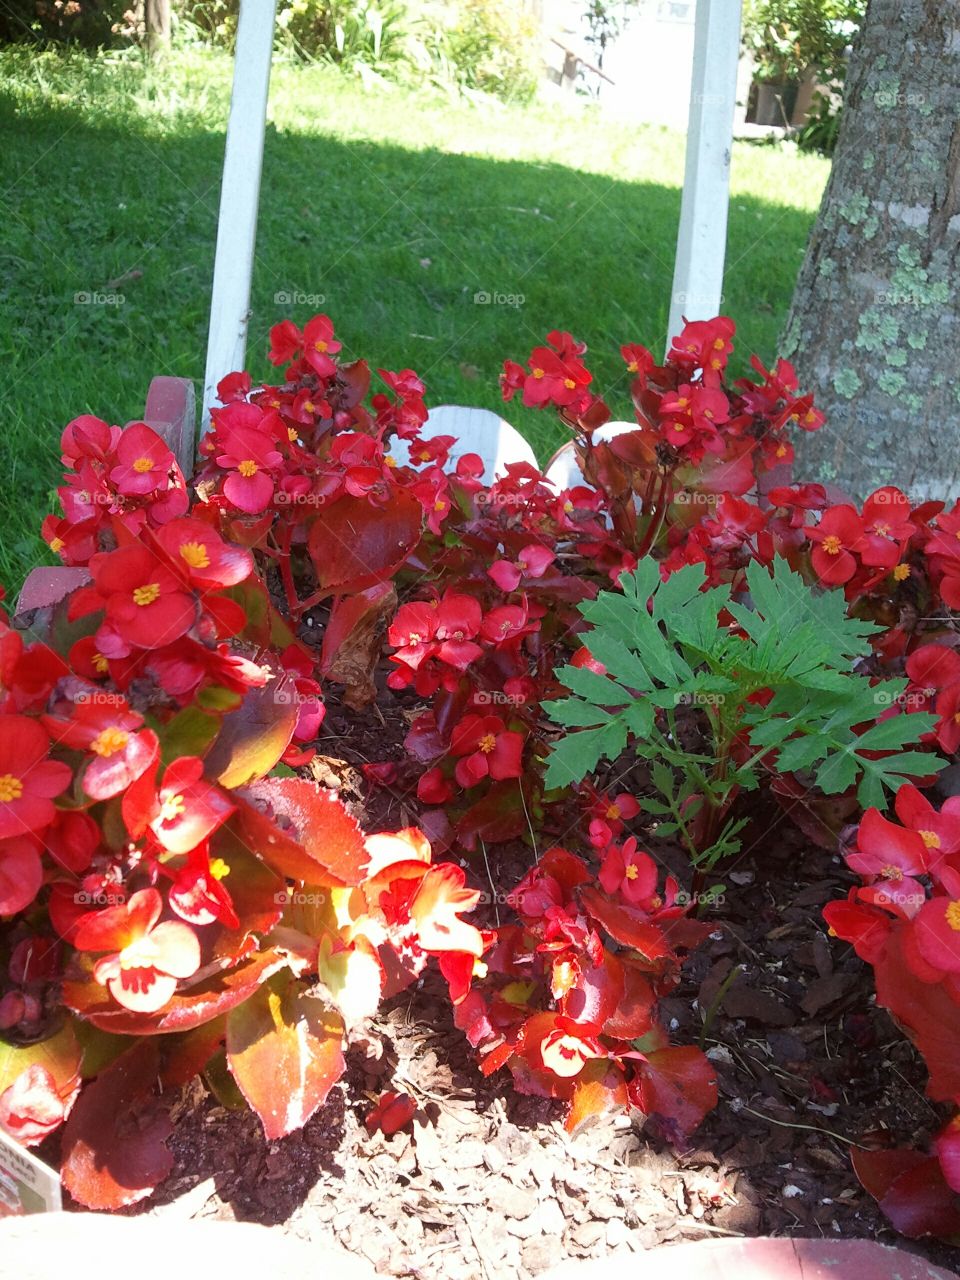 my mom's geraniums, beautiful red